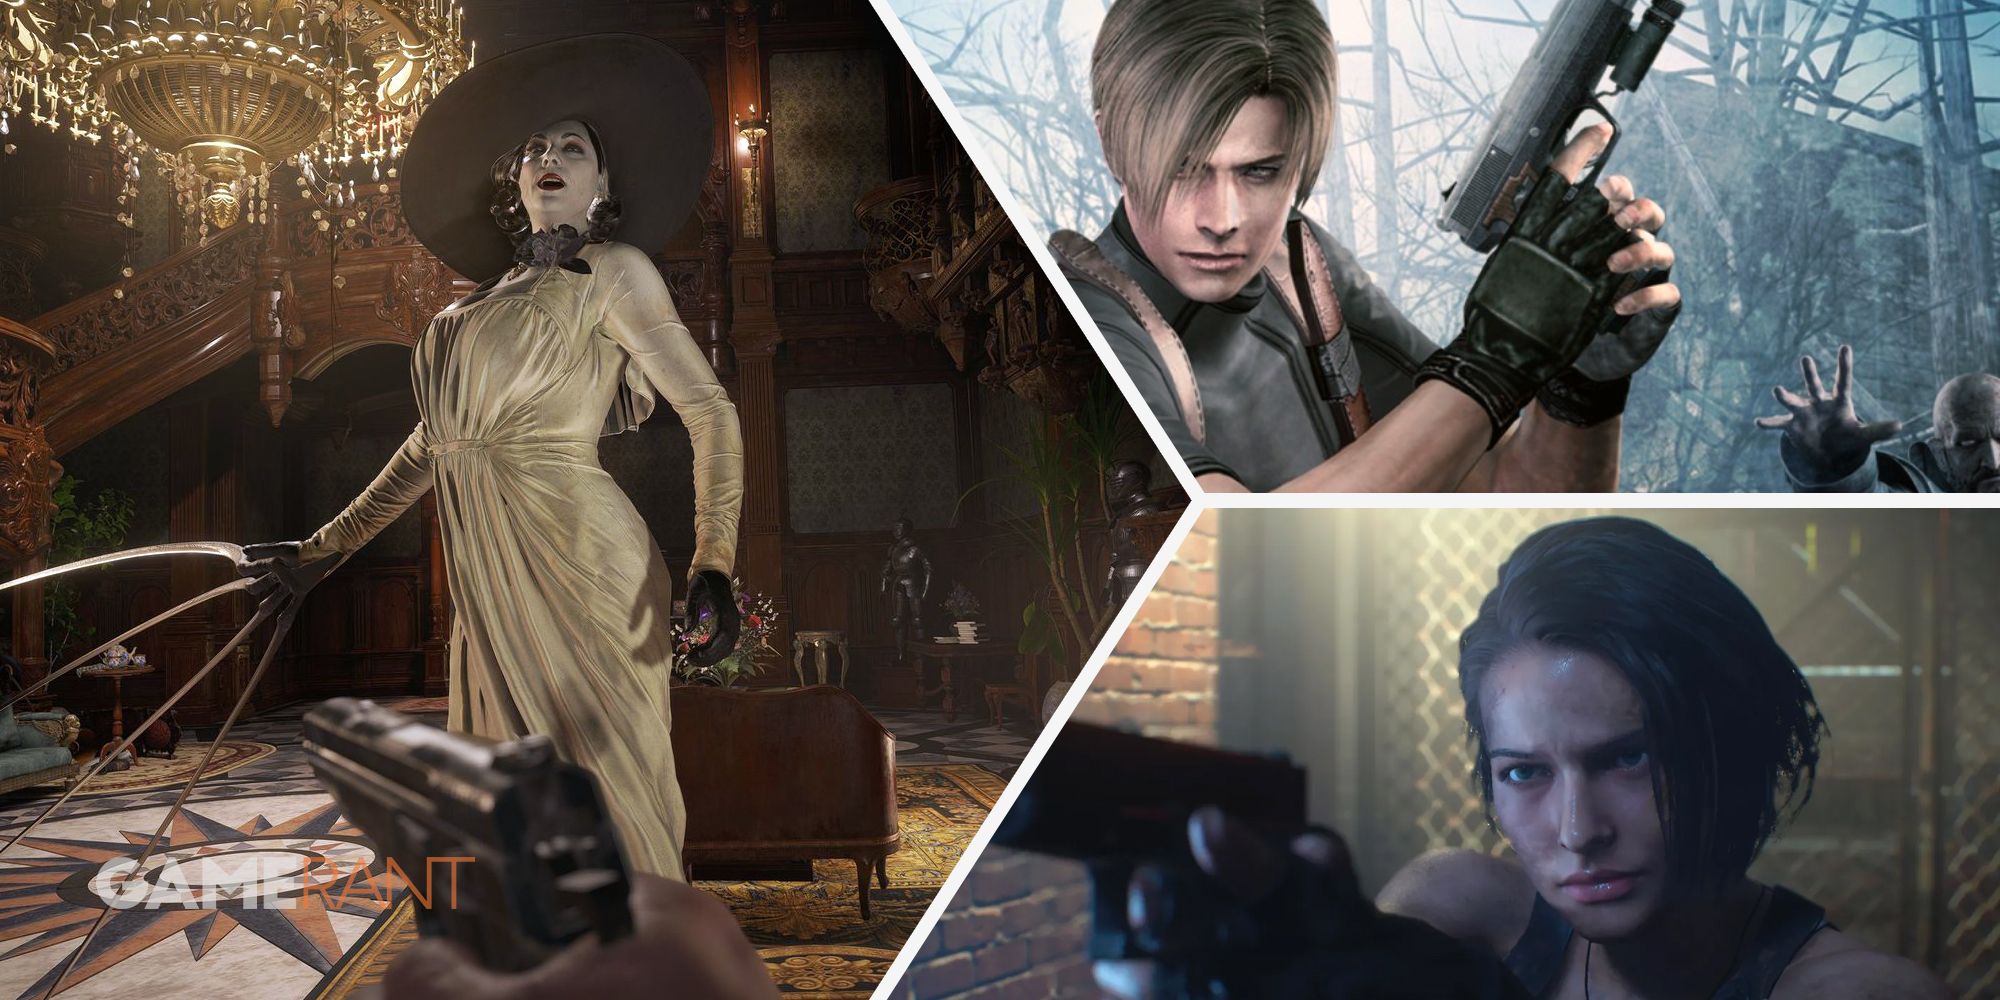 Resident Evil Village Леди Димитреску готовится к атаке слева, Resident Evil Леон с пистолетом вверху справа, Resident Evil 3 Джилл с пистолетом внизу справа